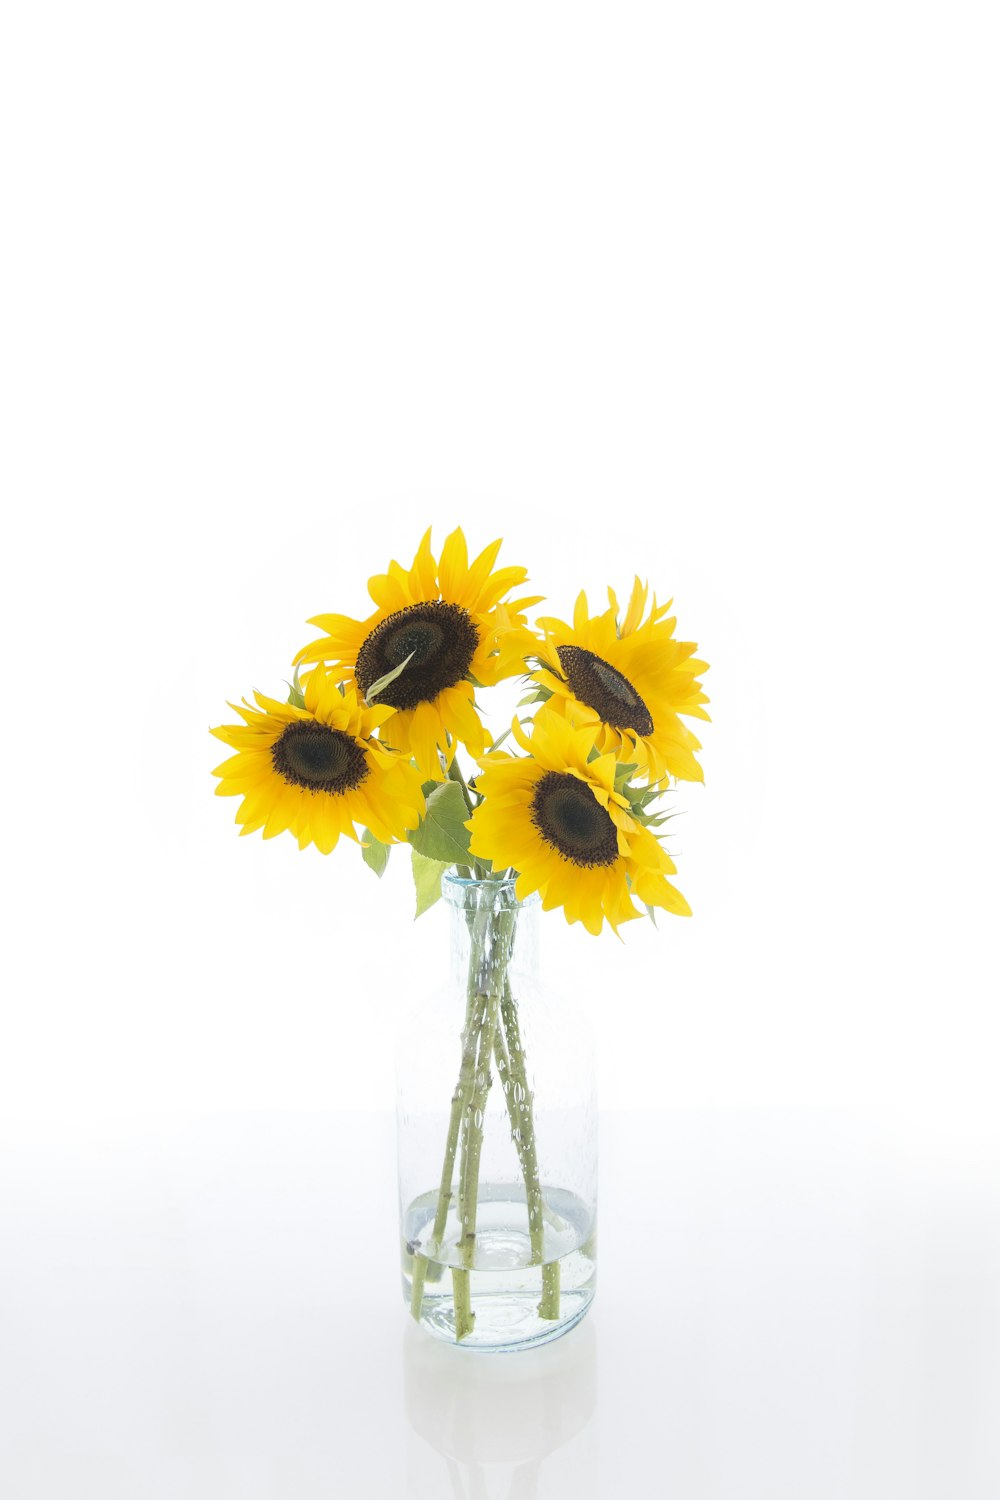 quatre tournesols jaunes dans un vase en verre transparent